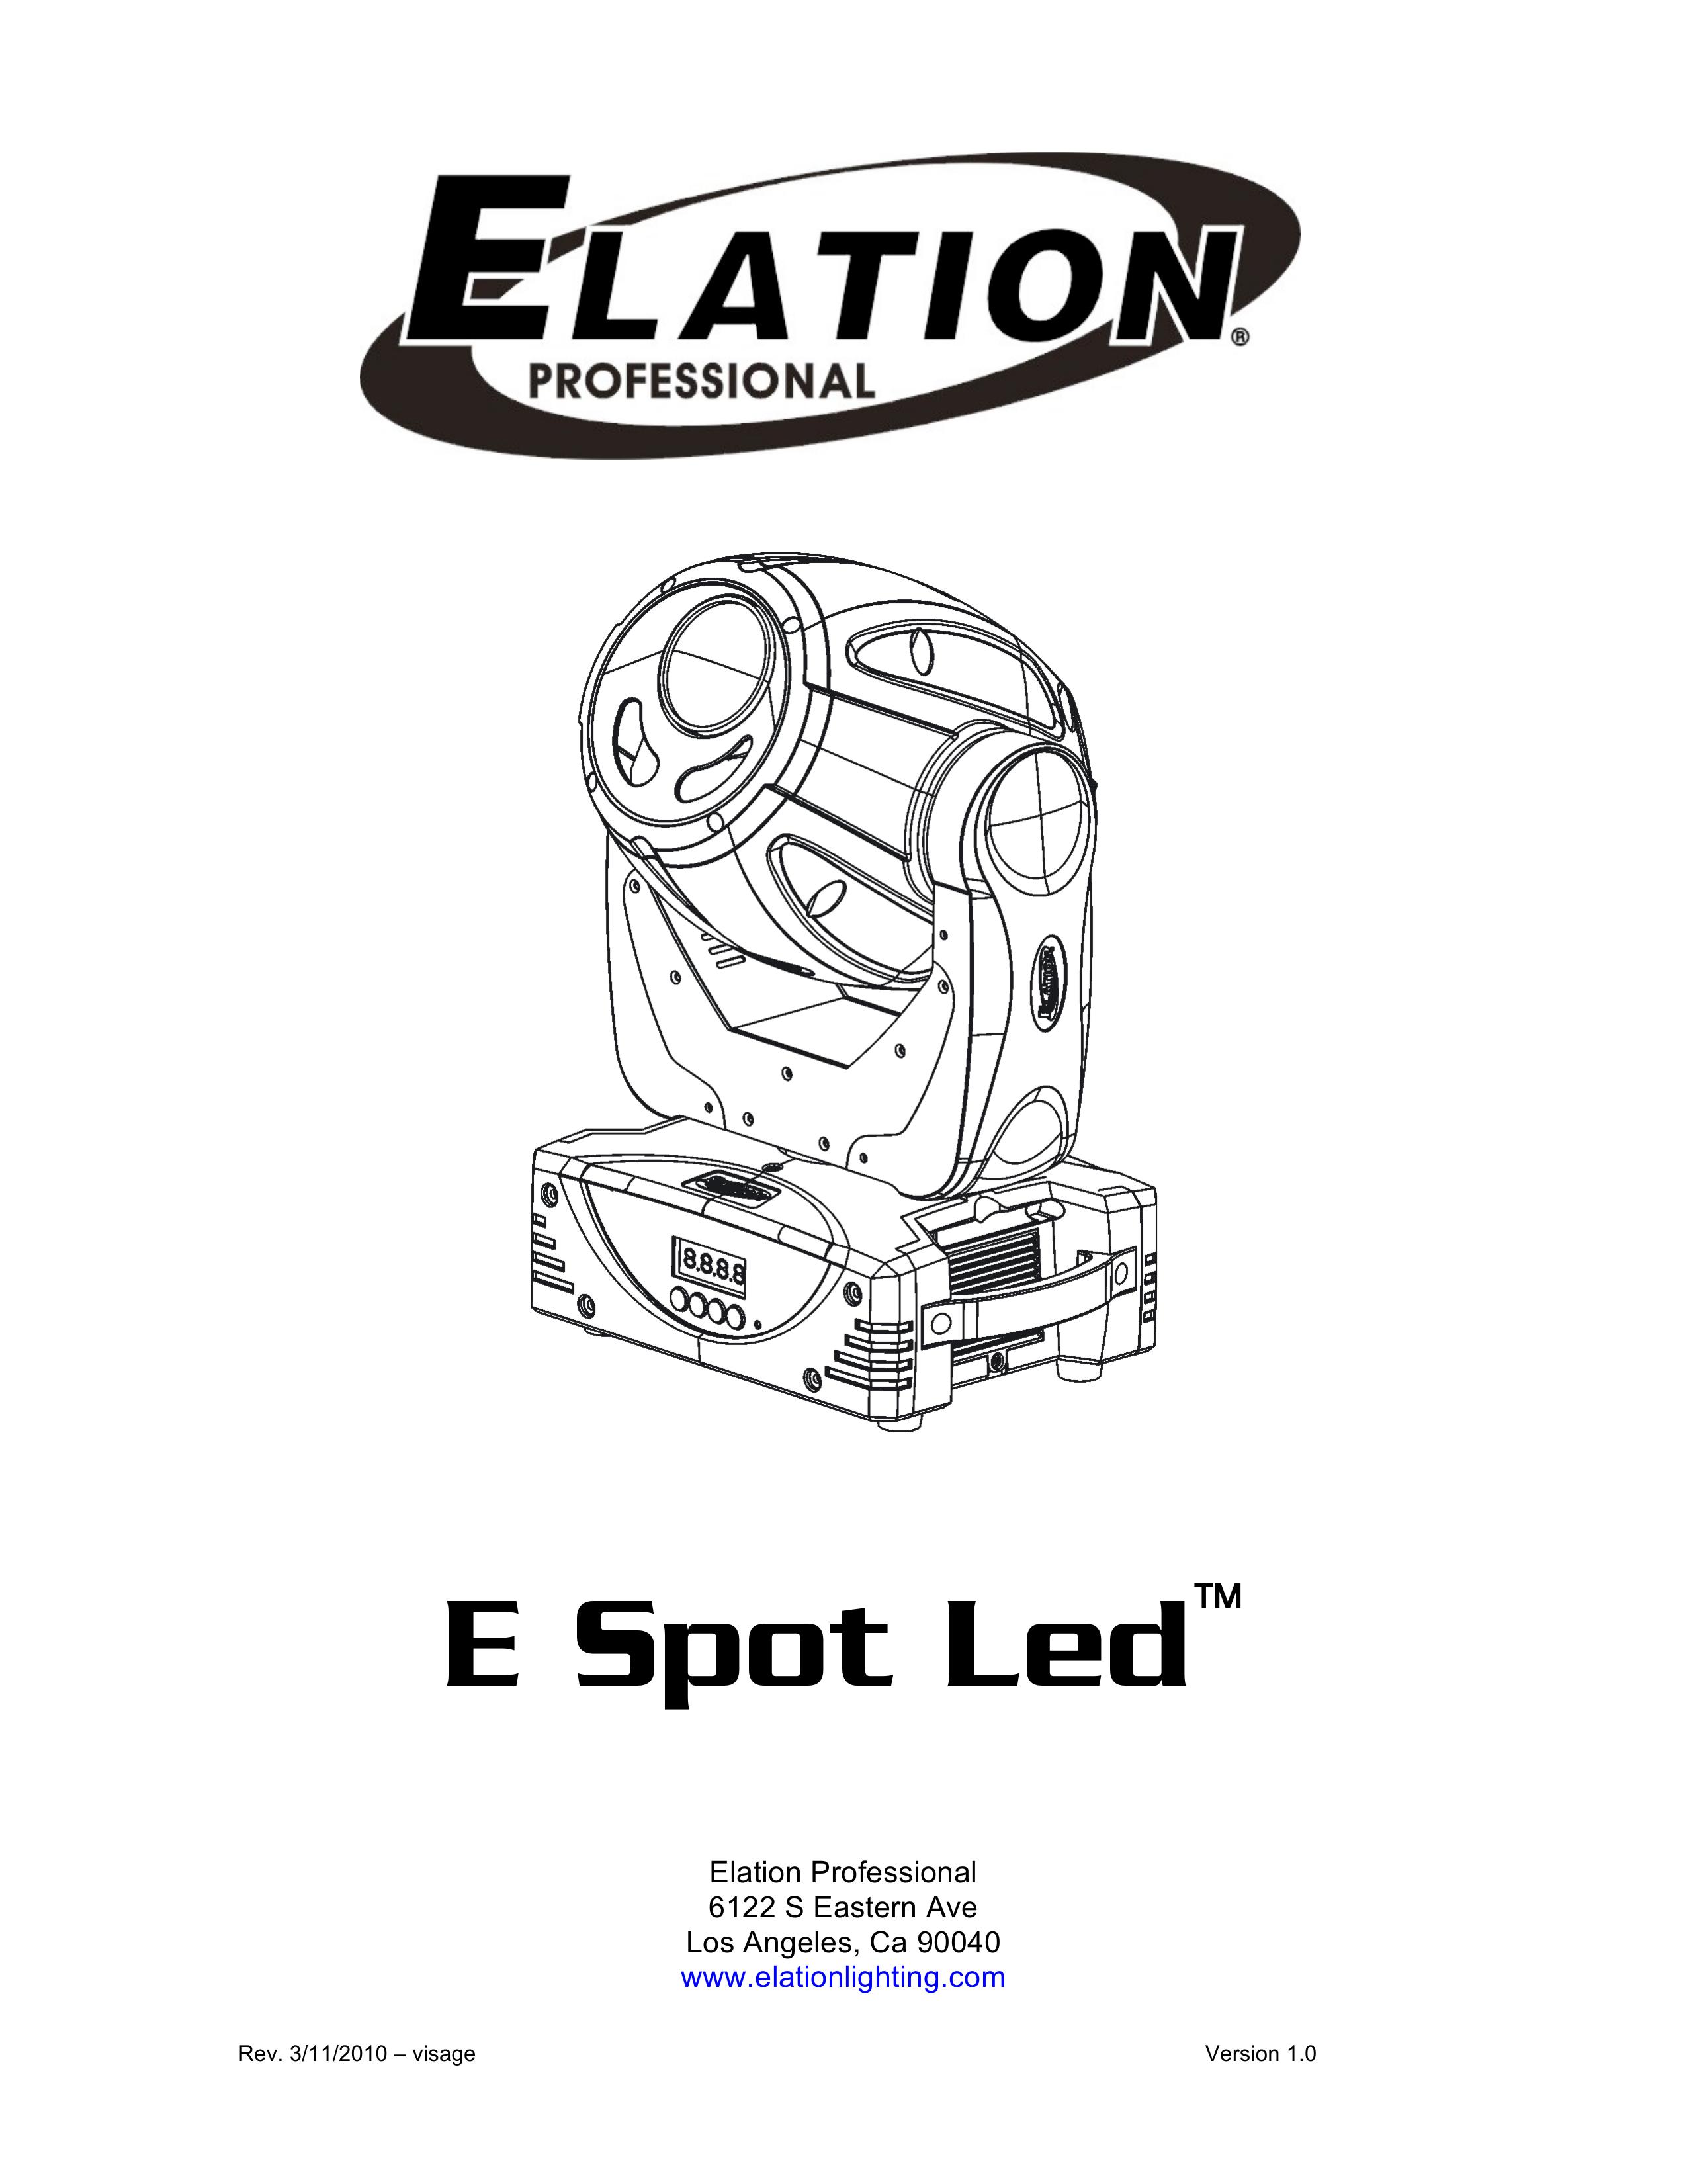 Elation Professional E Spot LED Boating Equipment User Manual